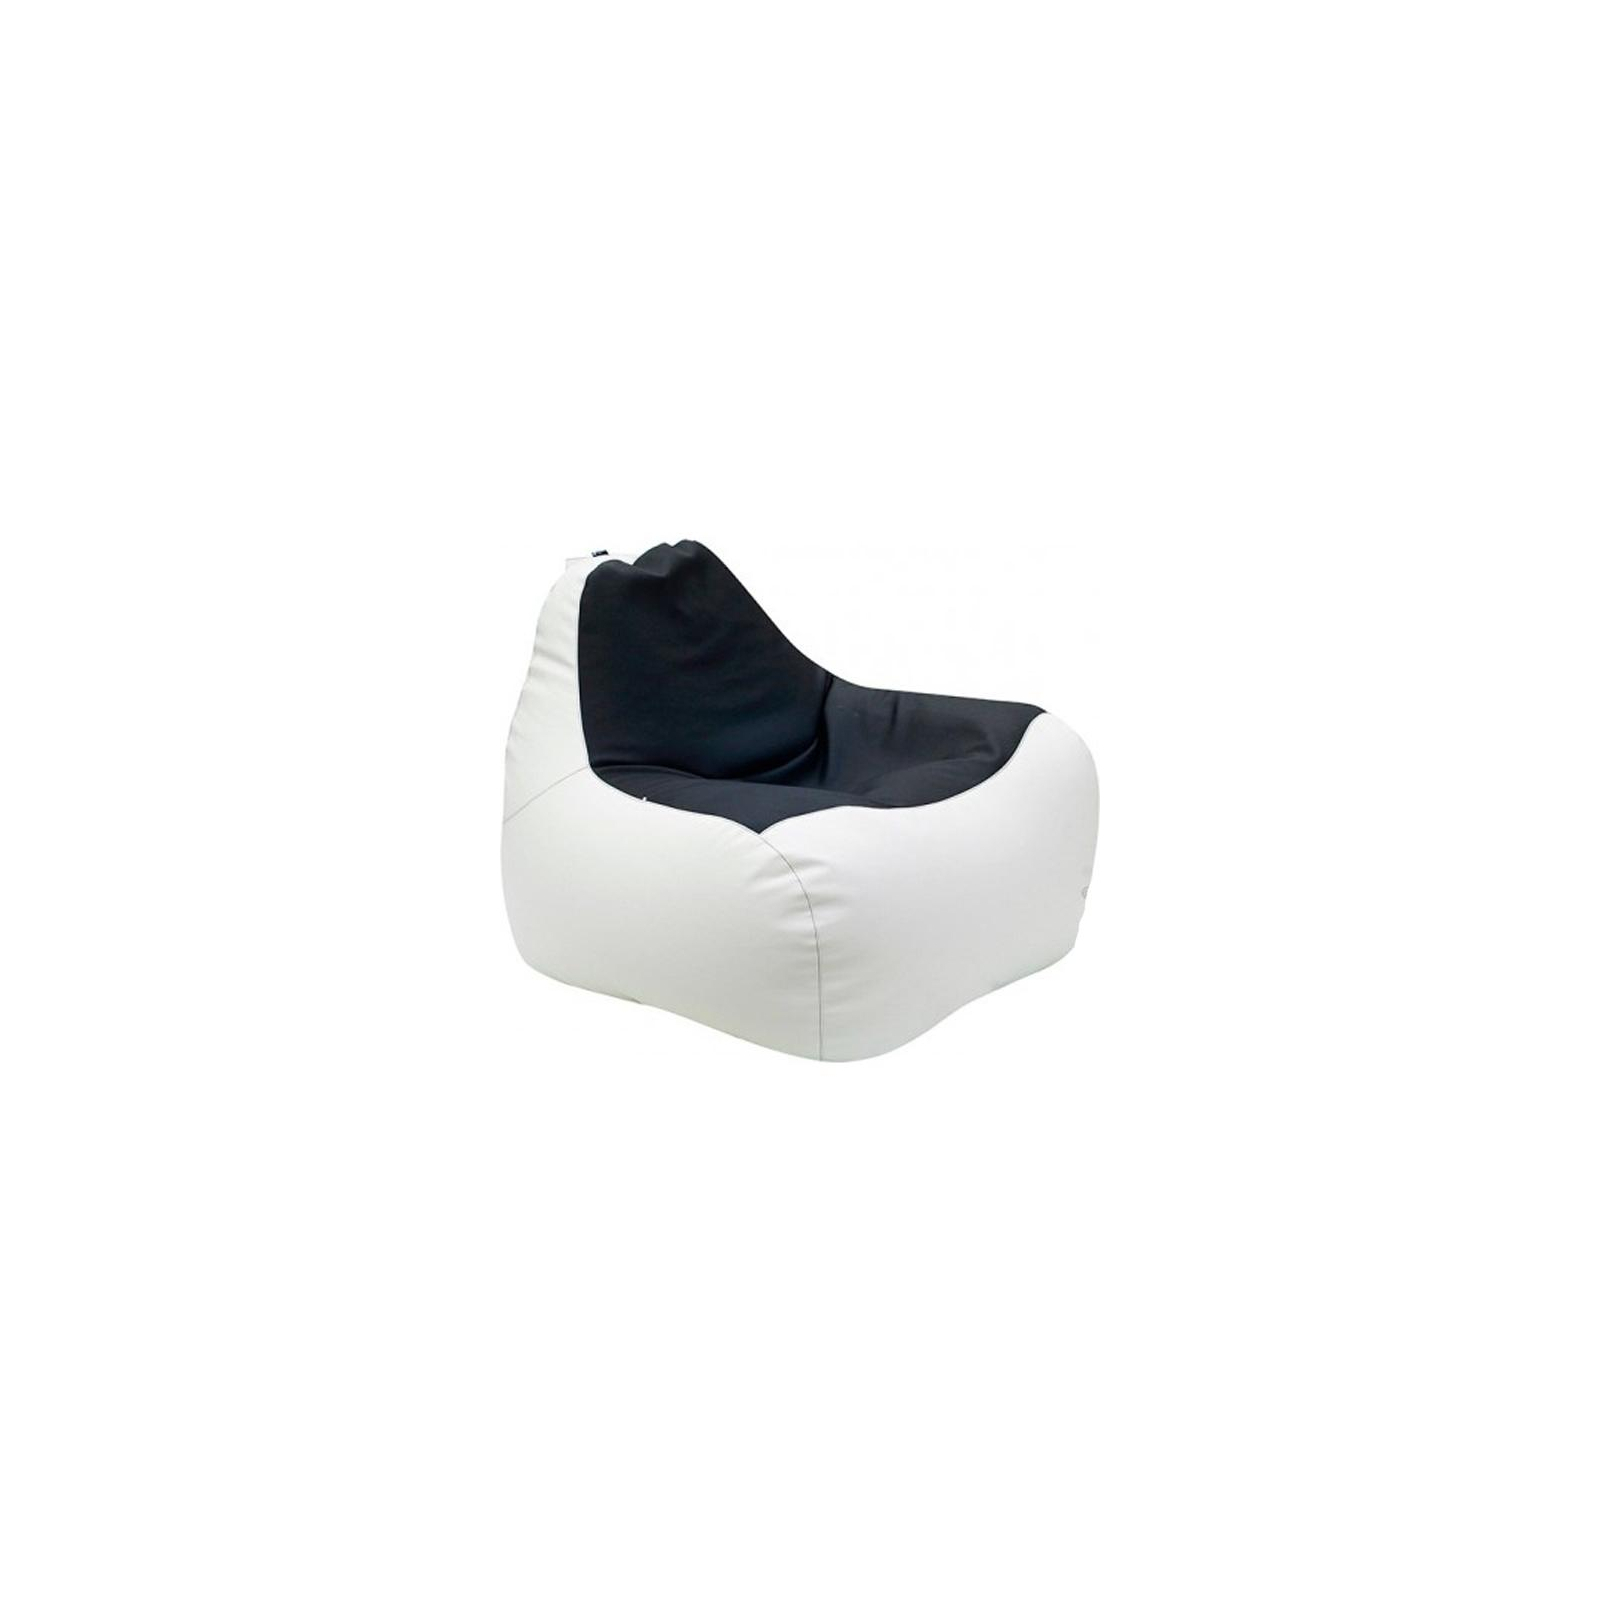 Кресло-мешок Примтекс плюс кресло-груша Simba H-2200/D-5 S White-Black (Simba H-2200/D-5 S White-Black)